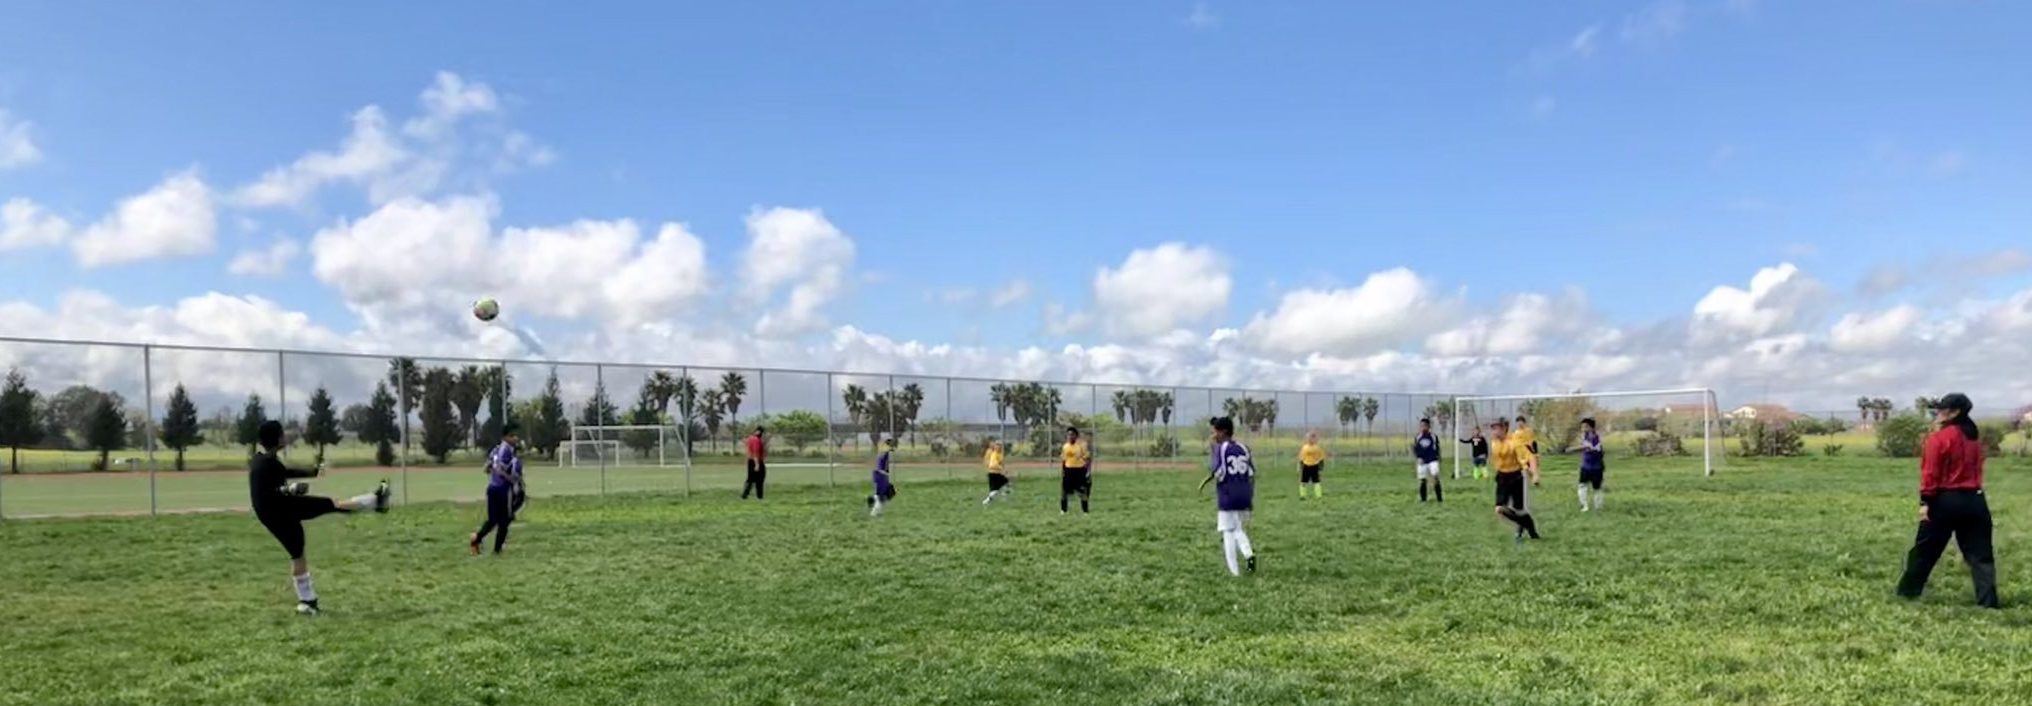 H. Allen Hight soccer team playing on field